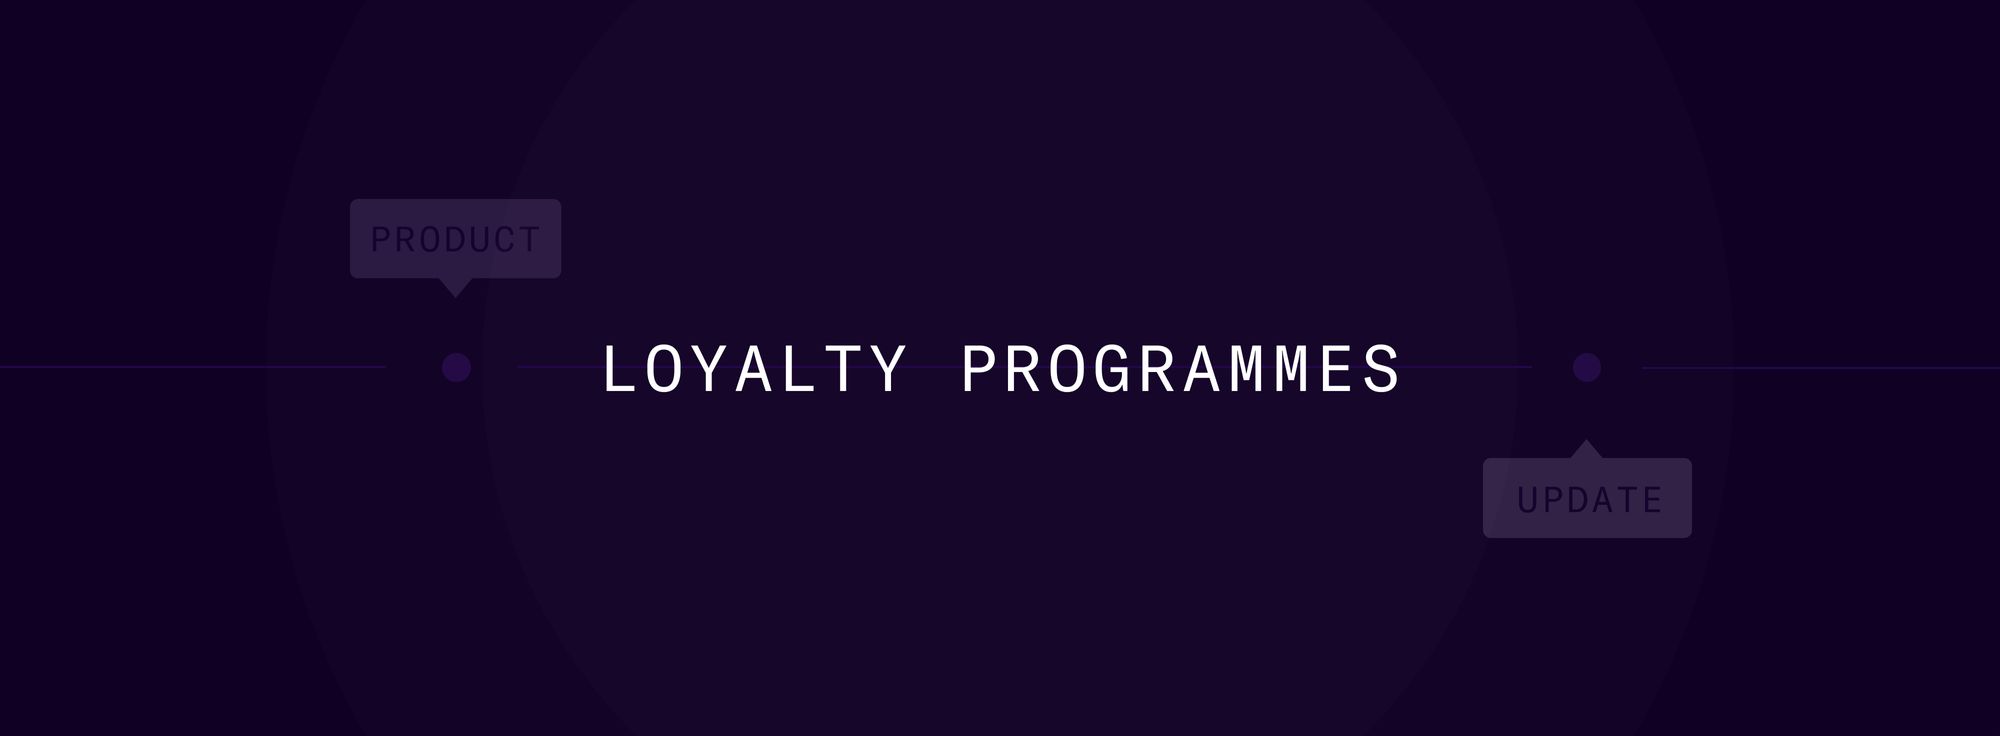 Introducing Loyalty Programmes